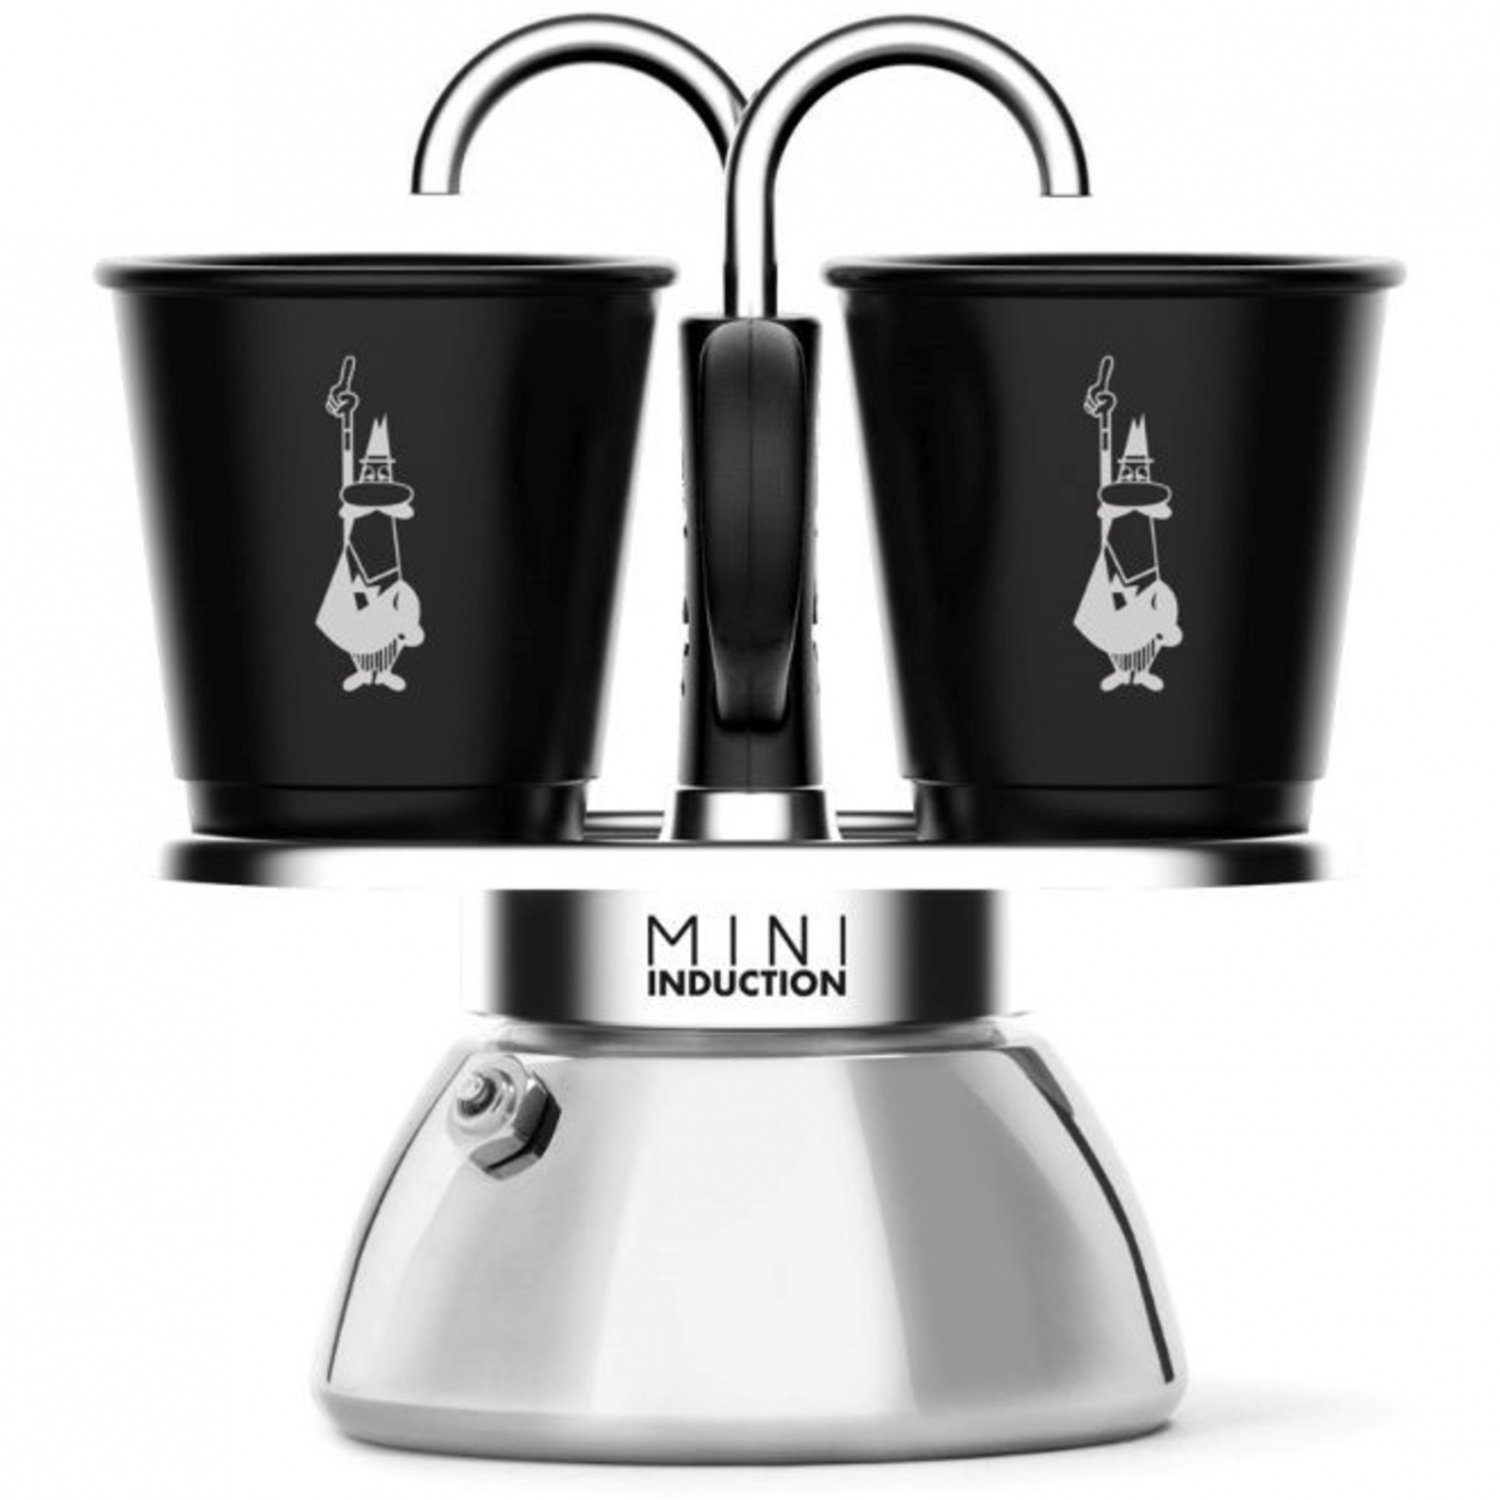 Bialetti Mini Express Induction 2 Cups